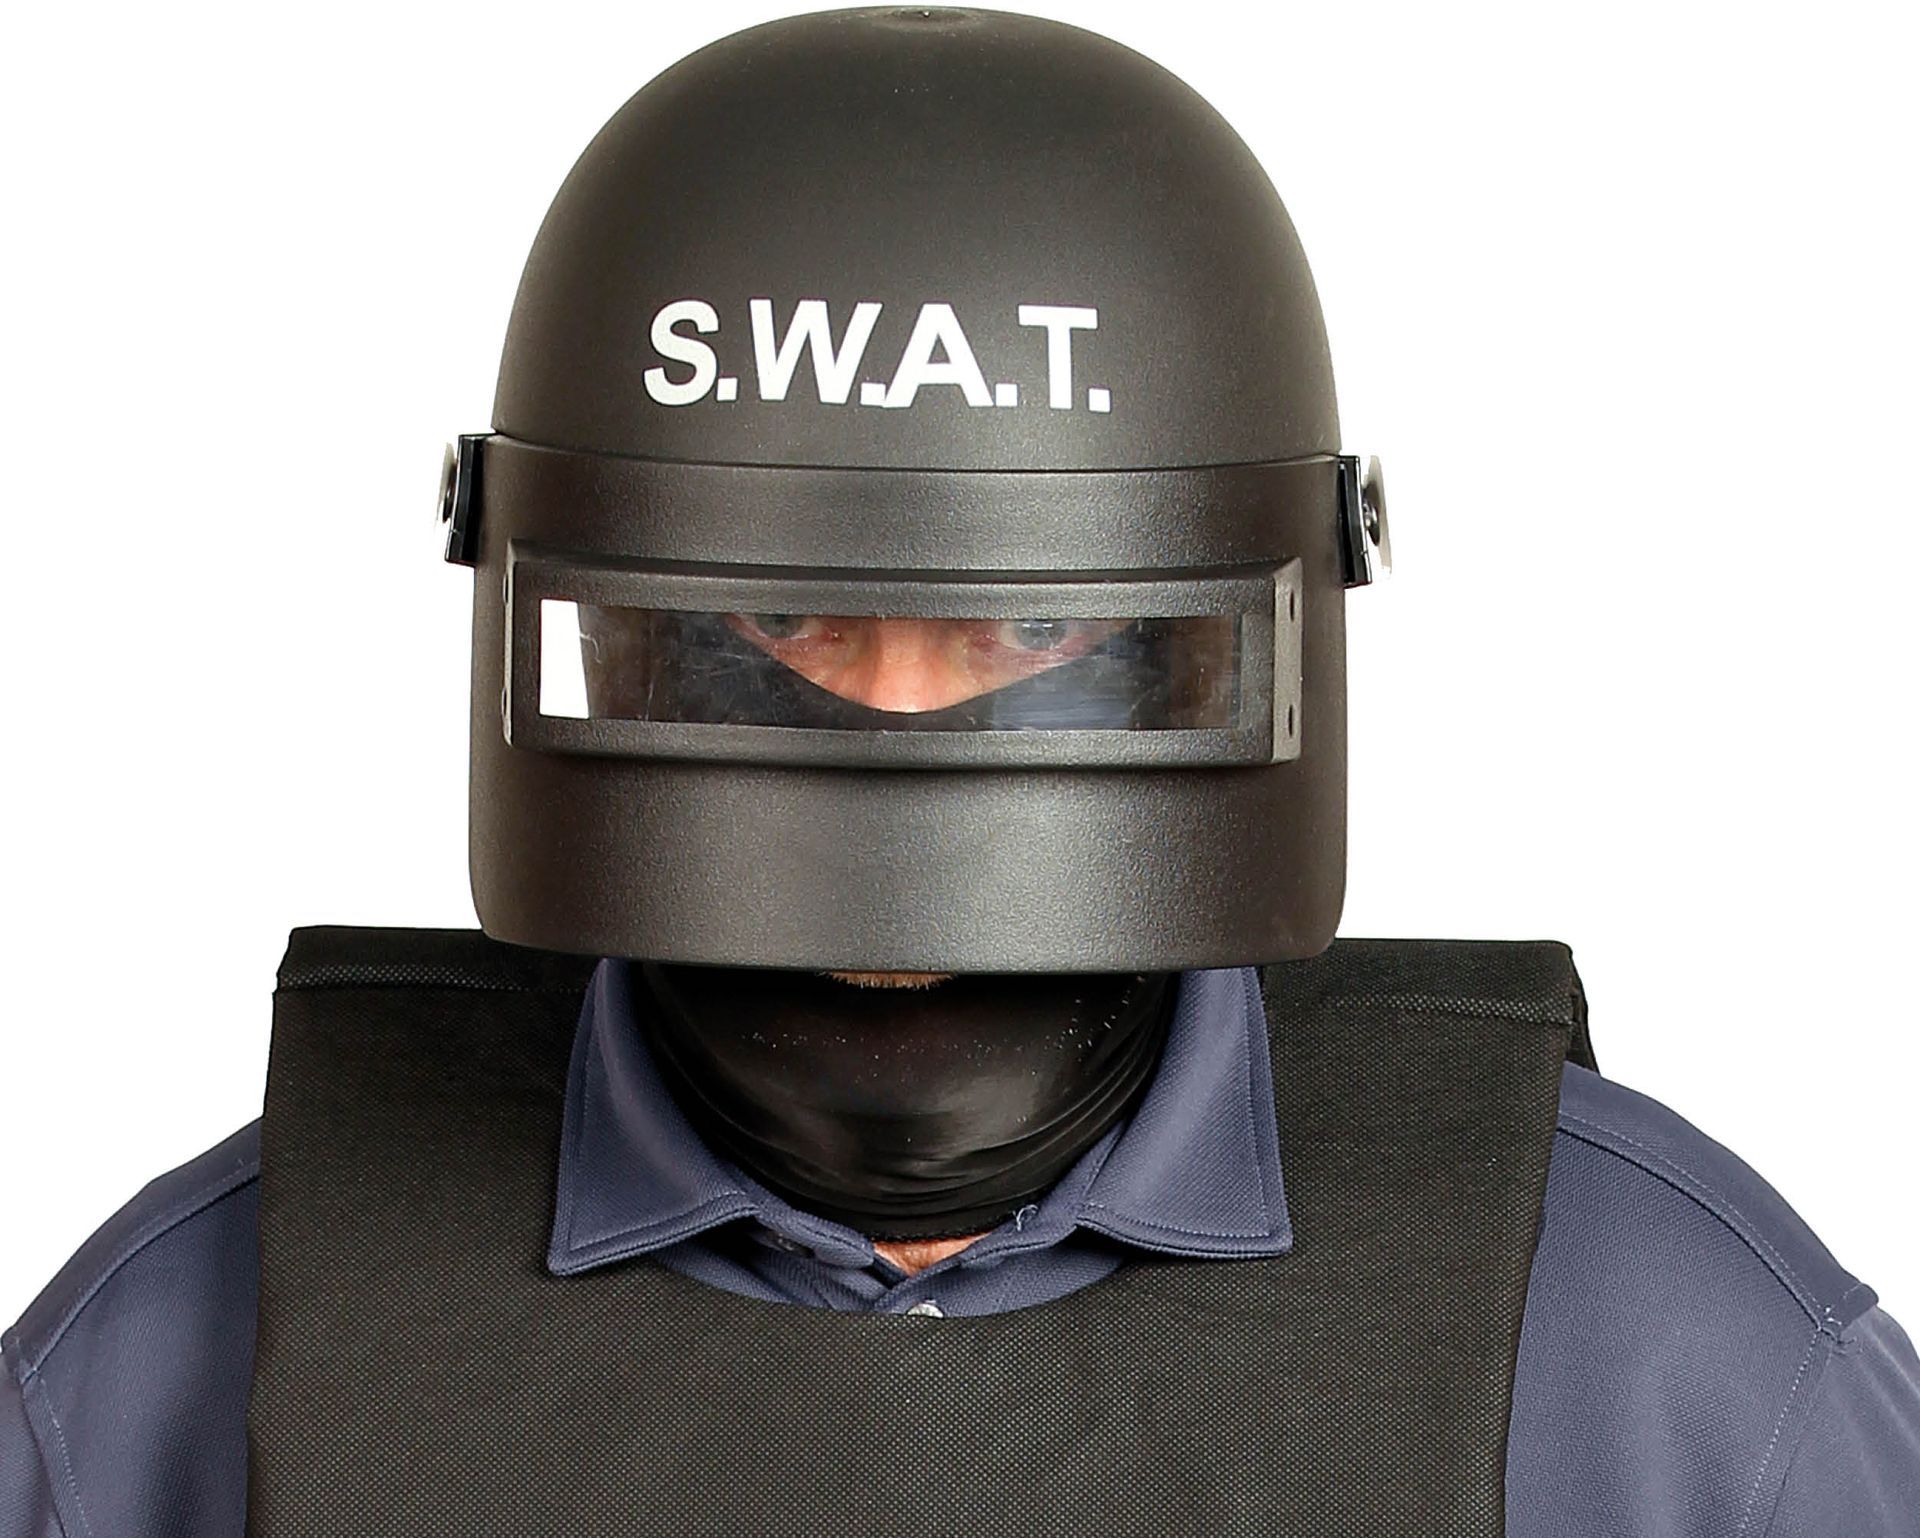 Zwarte SWAT helm volwassen